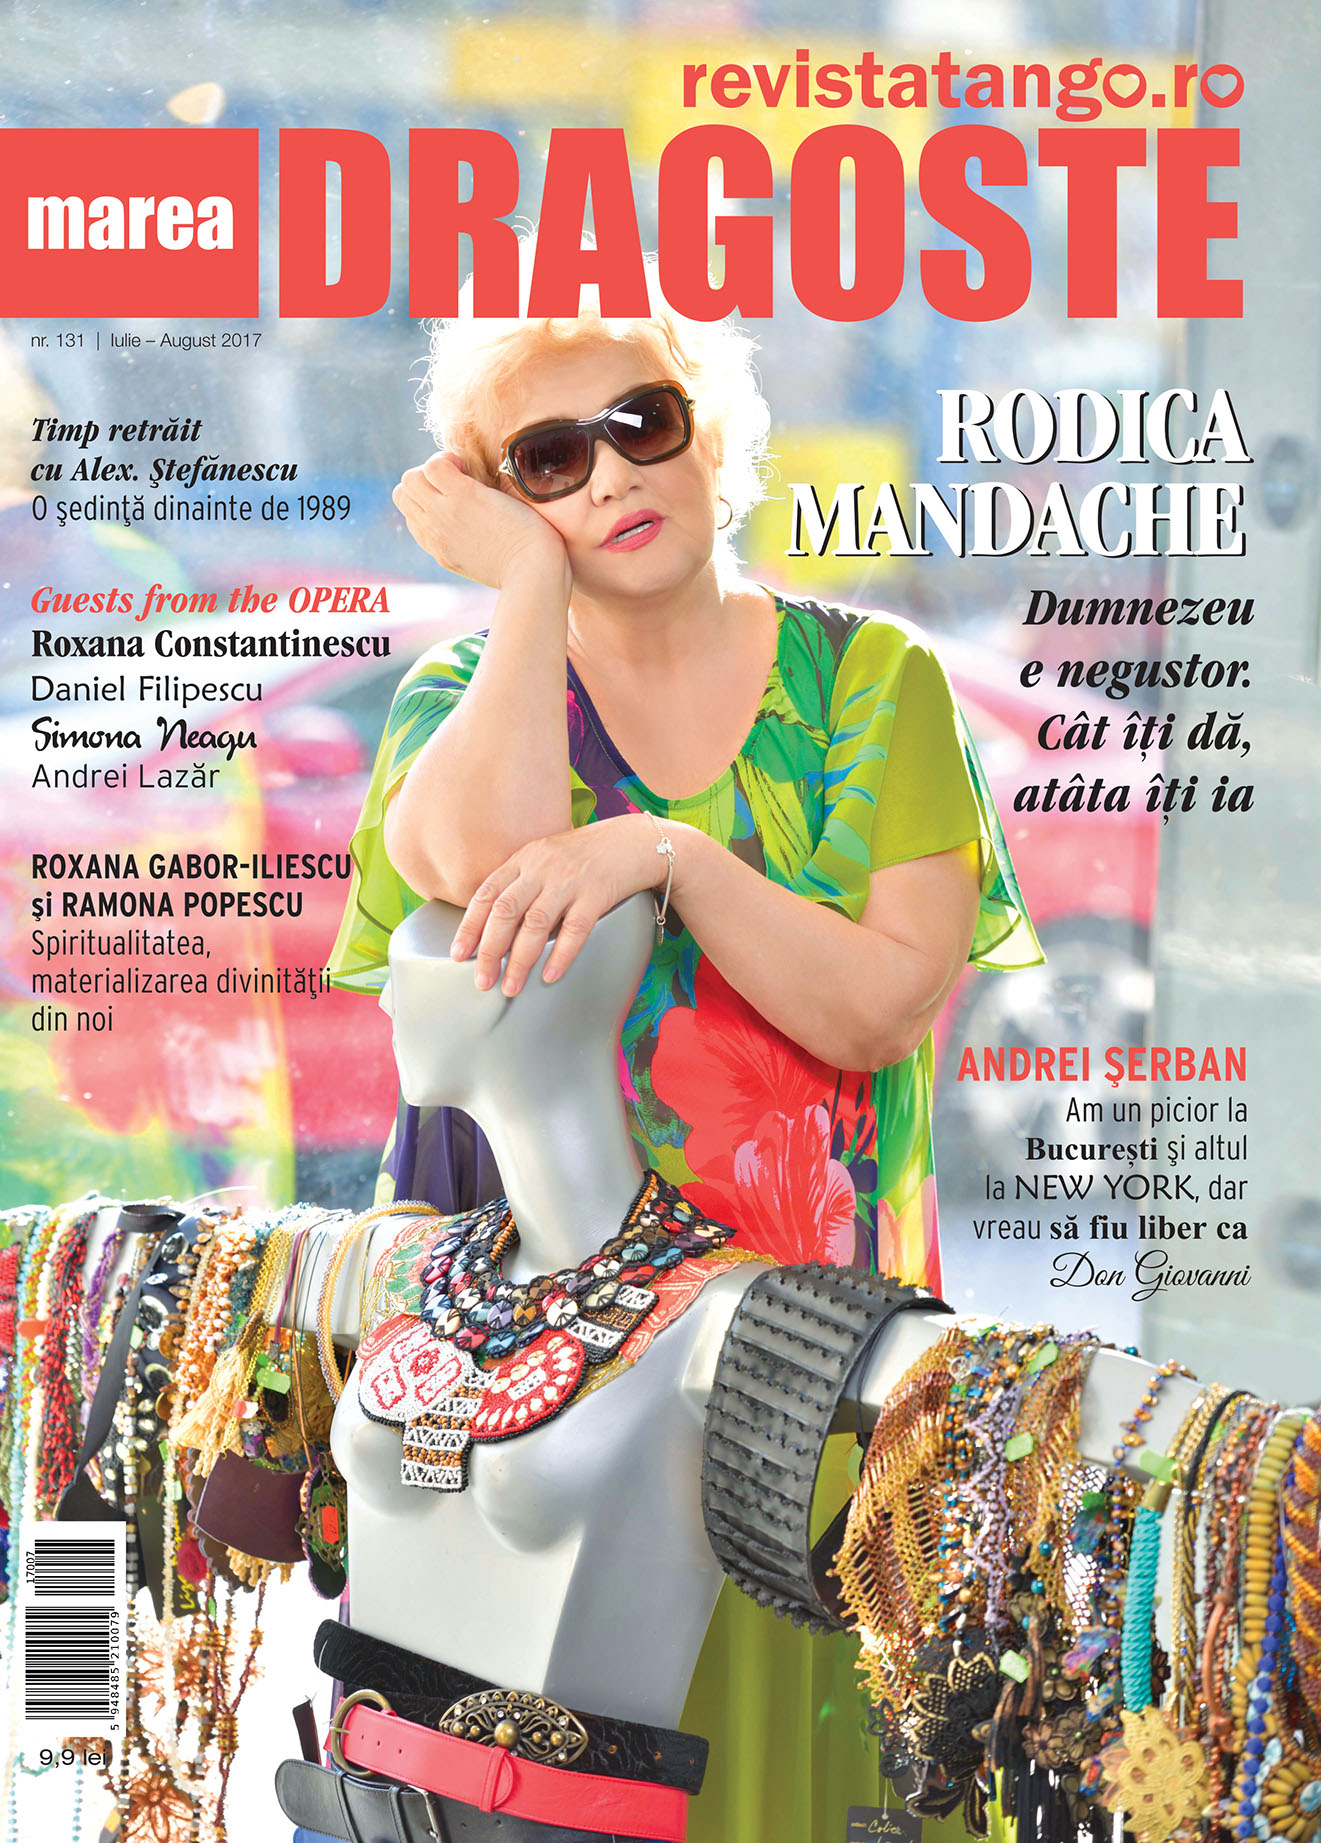 Rodica Mandache pe coperta Marea Dragoste-revistatango.ro, nr. 131, iulie - august 2017